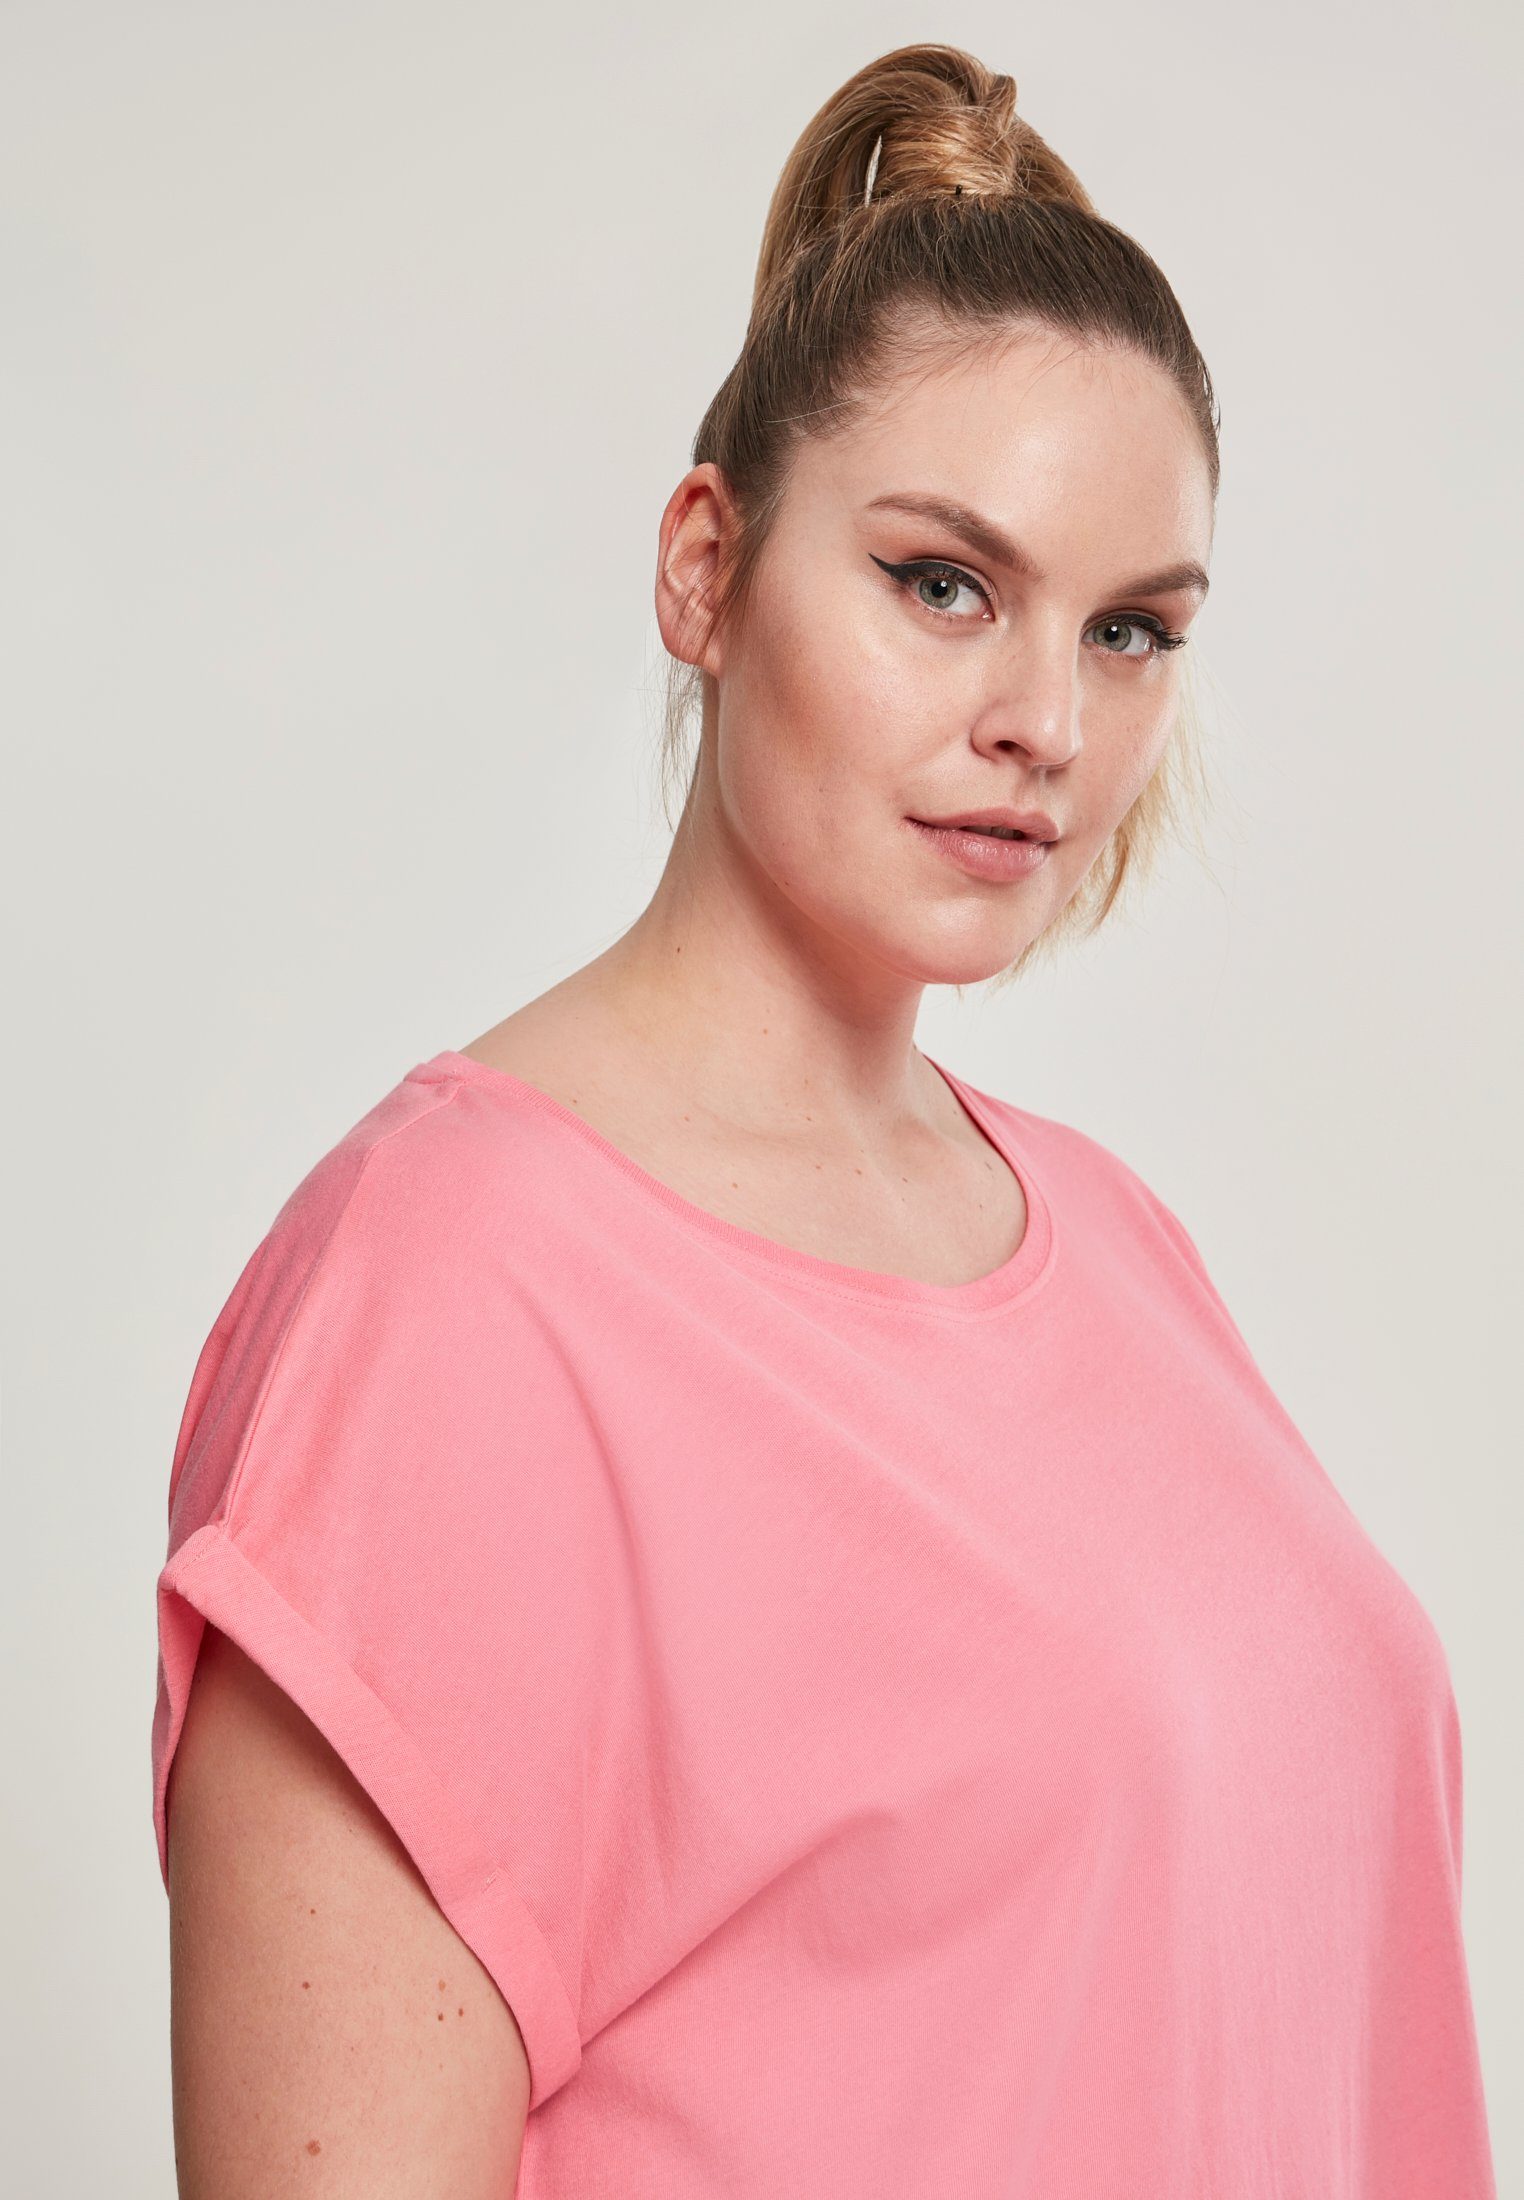 Extended T-Shirt pinkgrapefruit CLASSICS URBAN Shoulder TB771